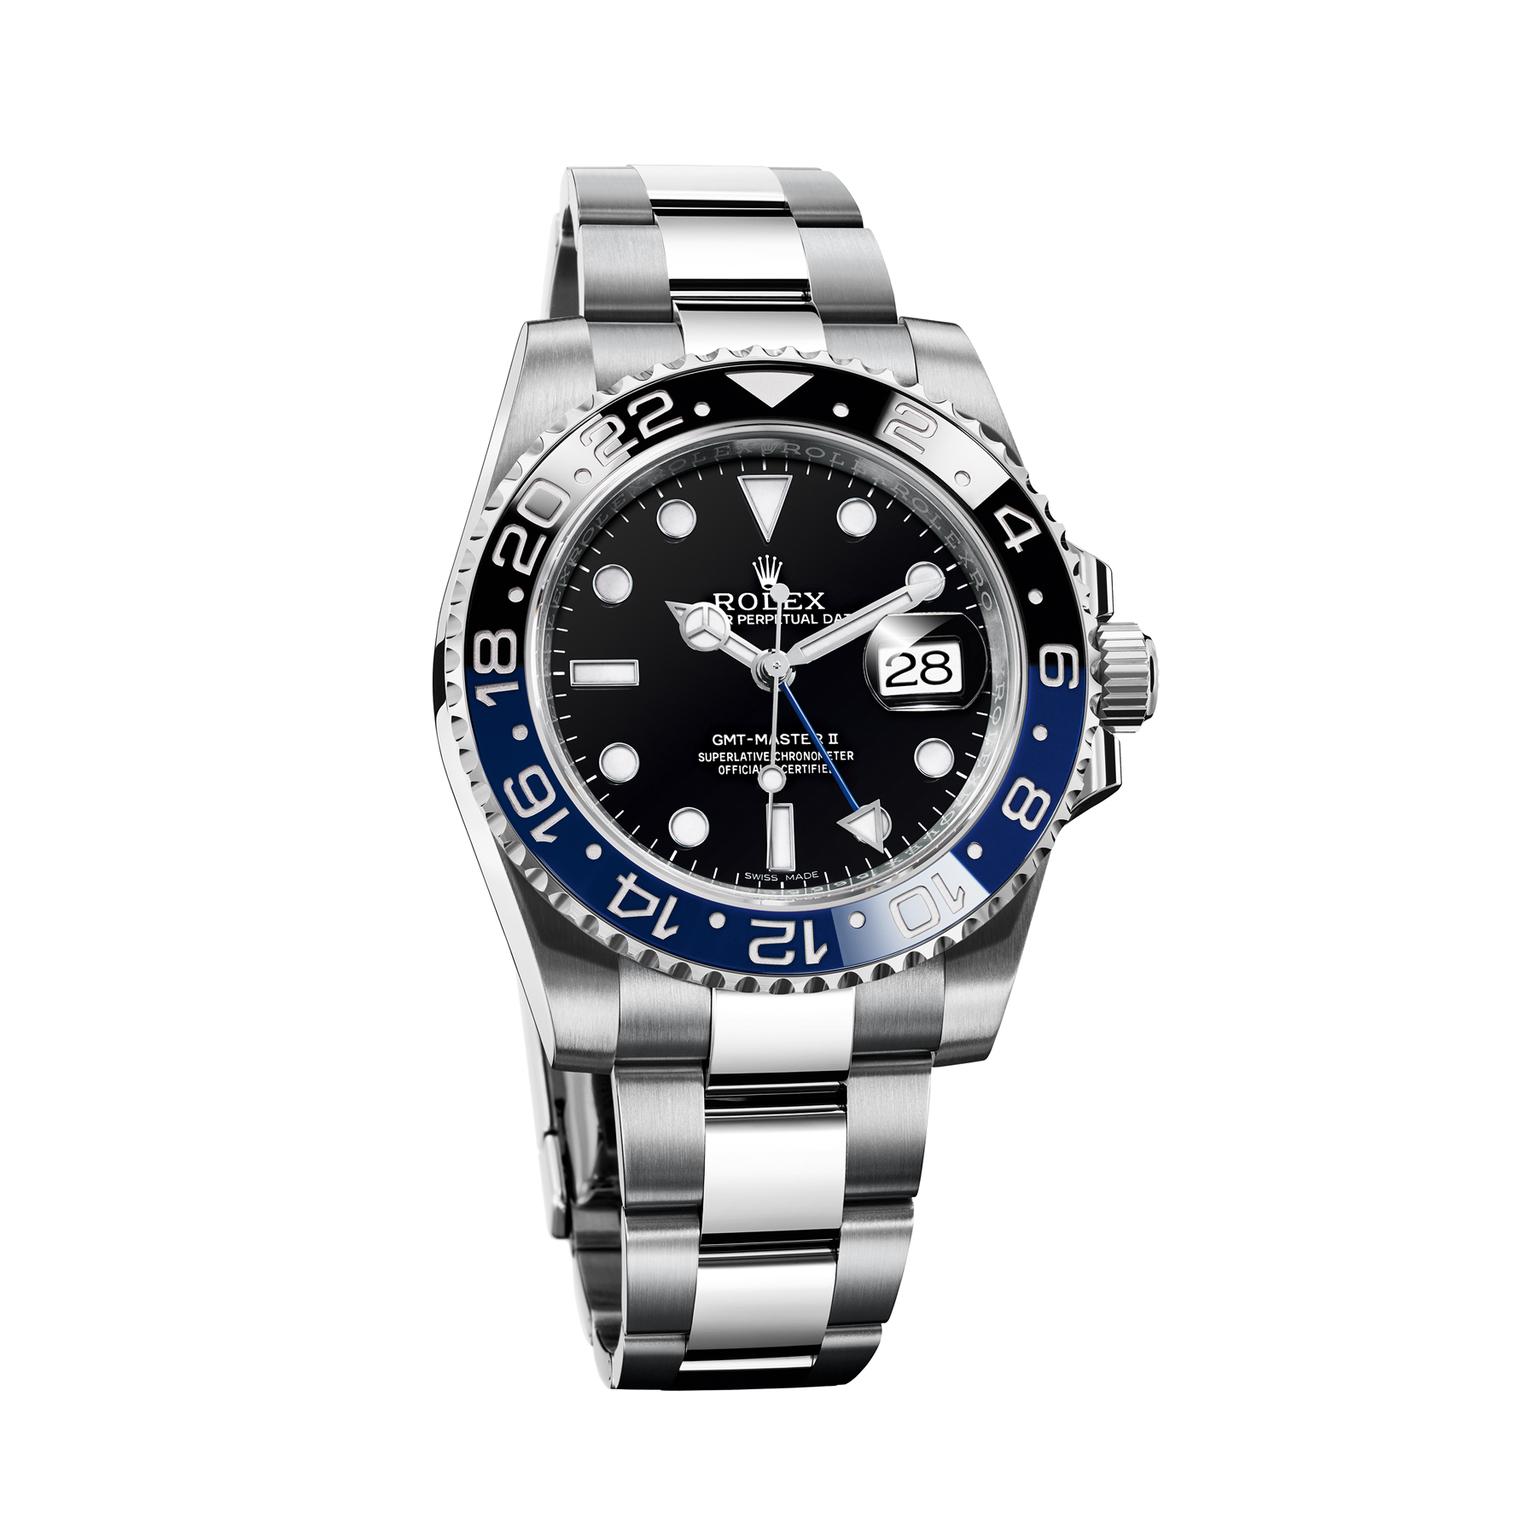 Rolex GMT-Master II 40mm watch in steel